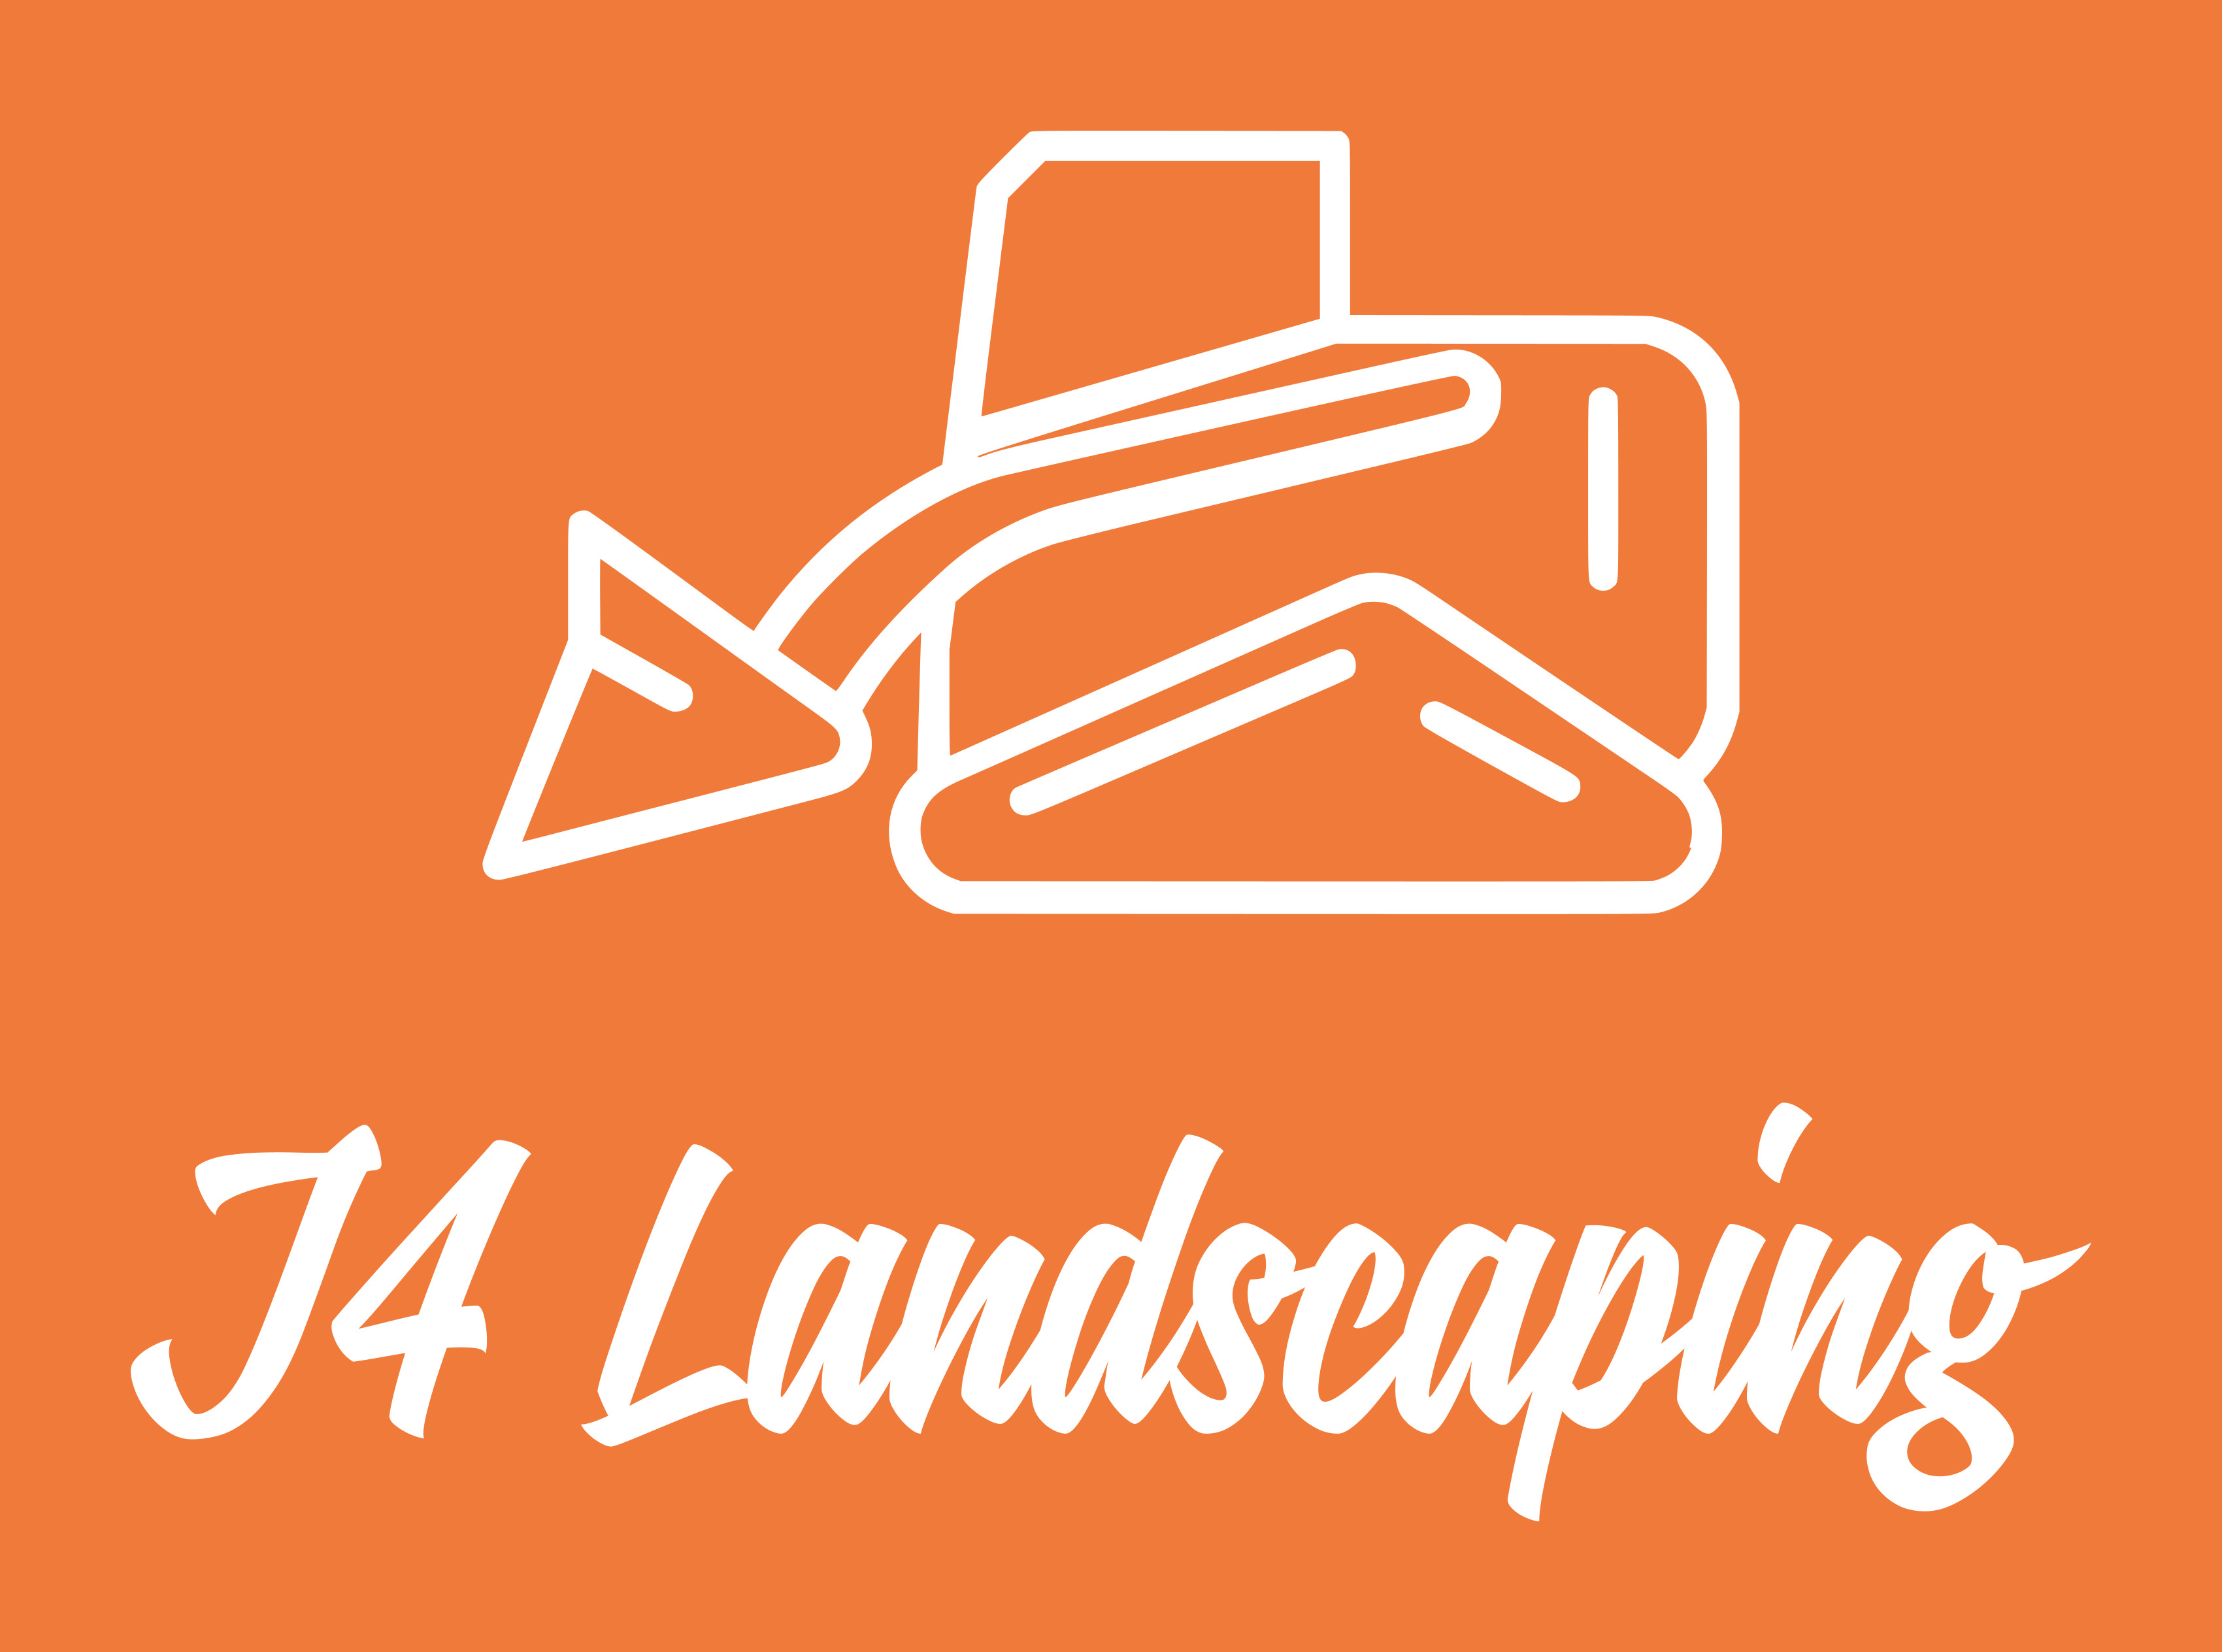 J4 Landscaping Logo